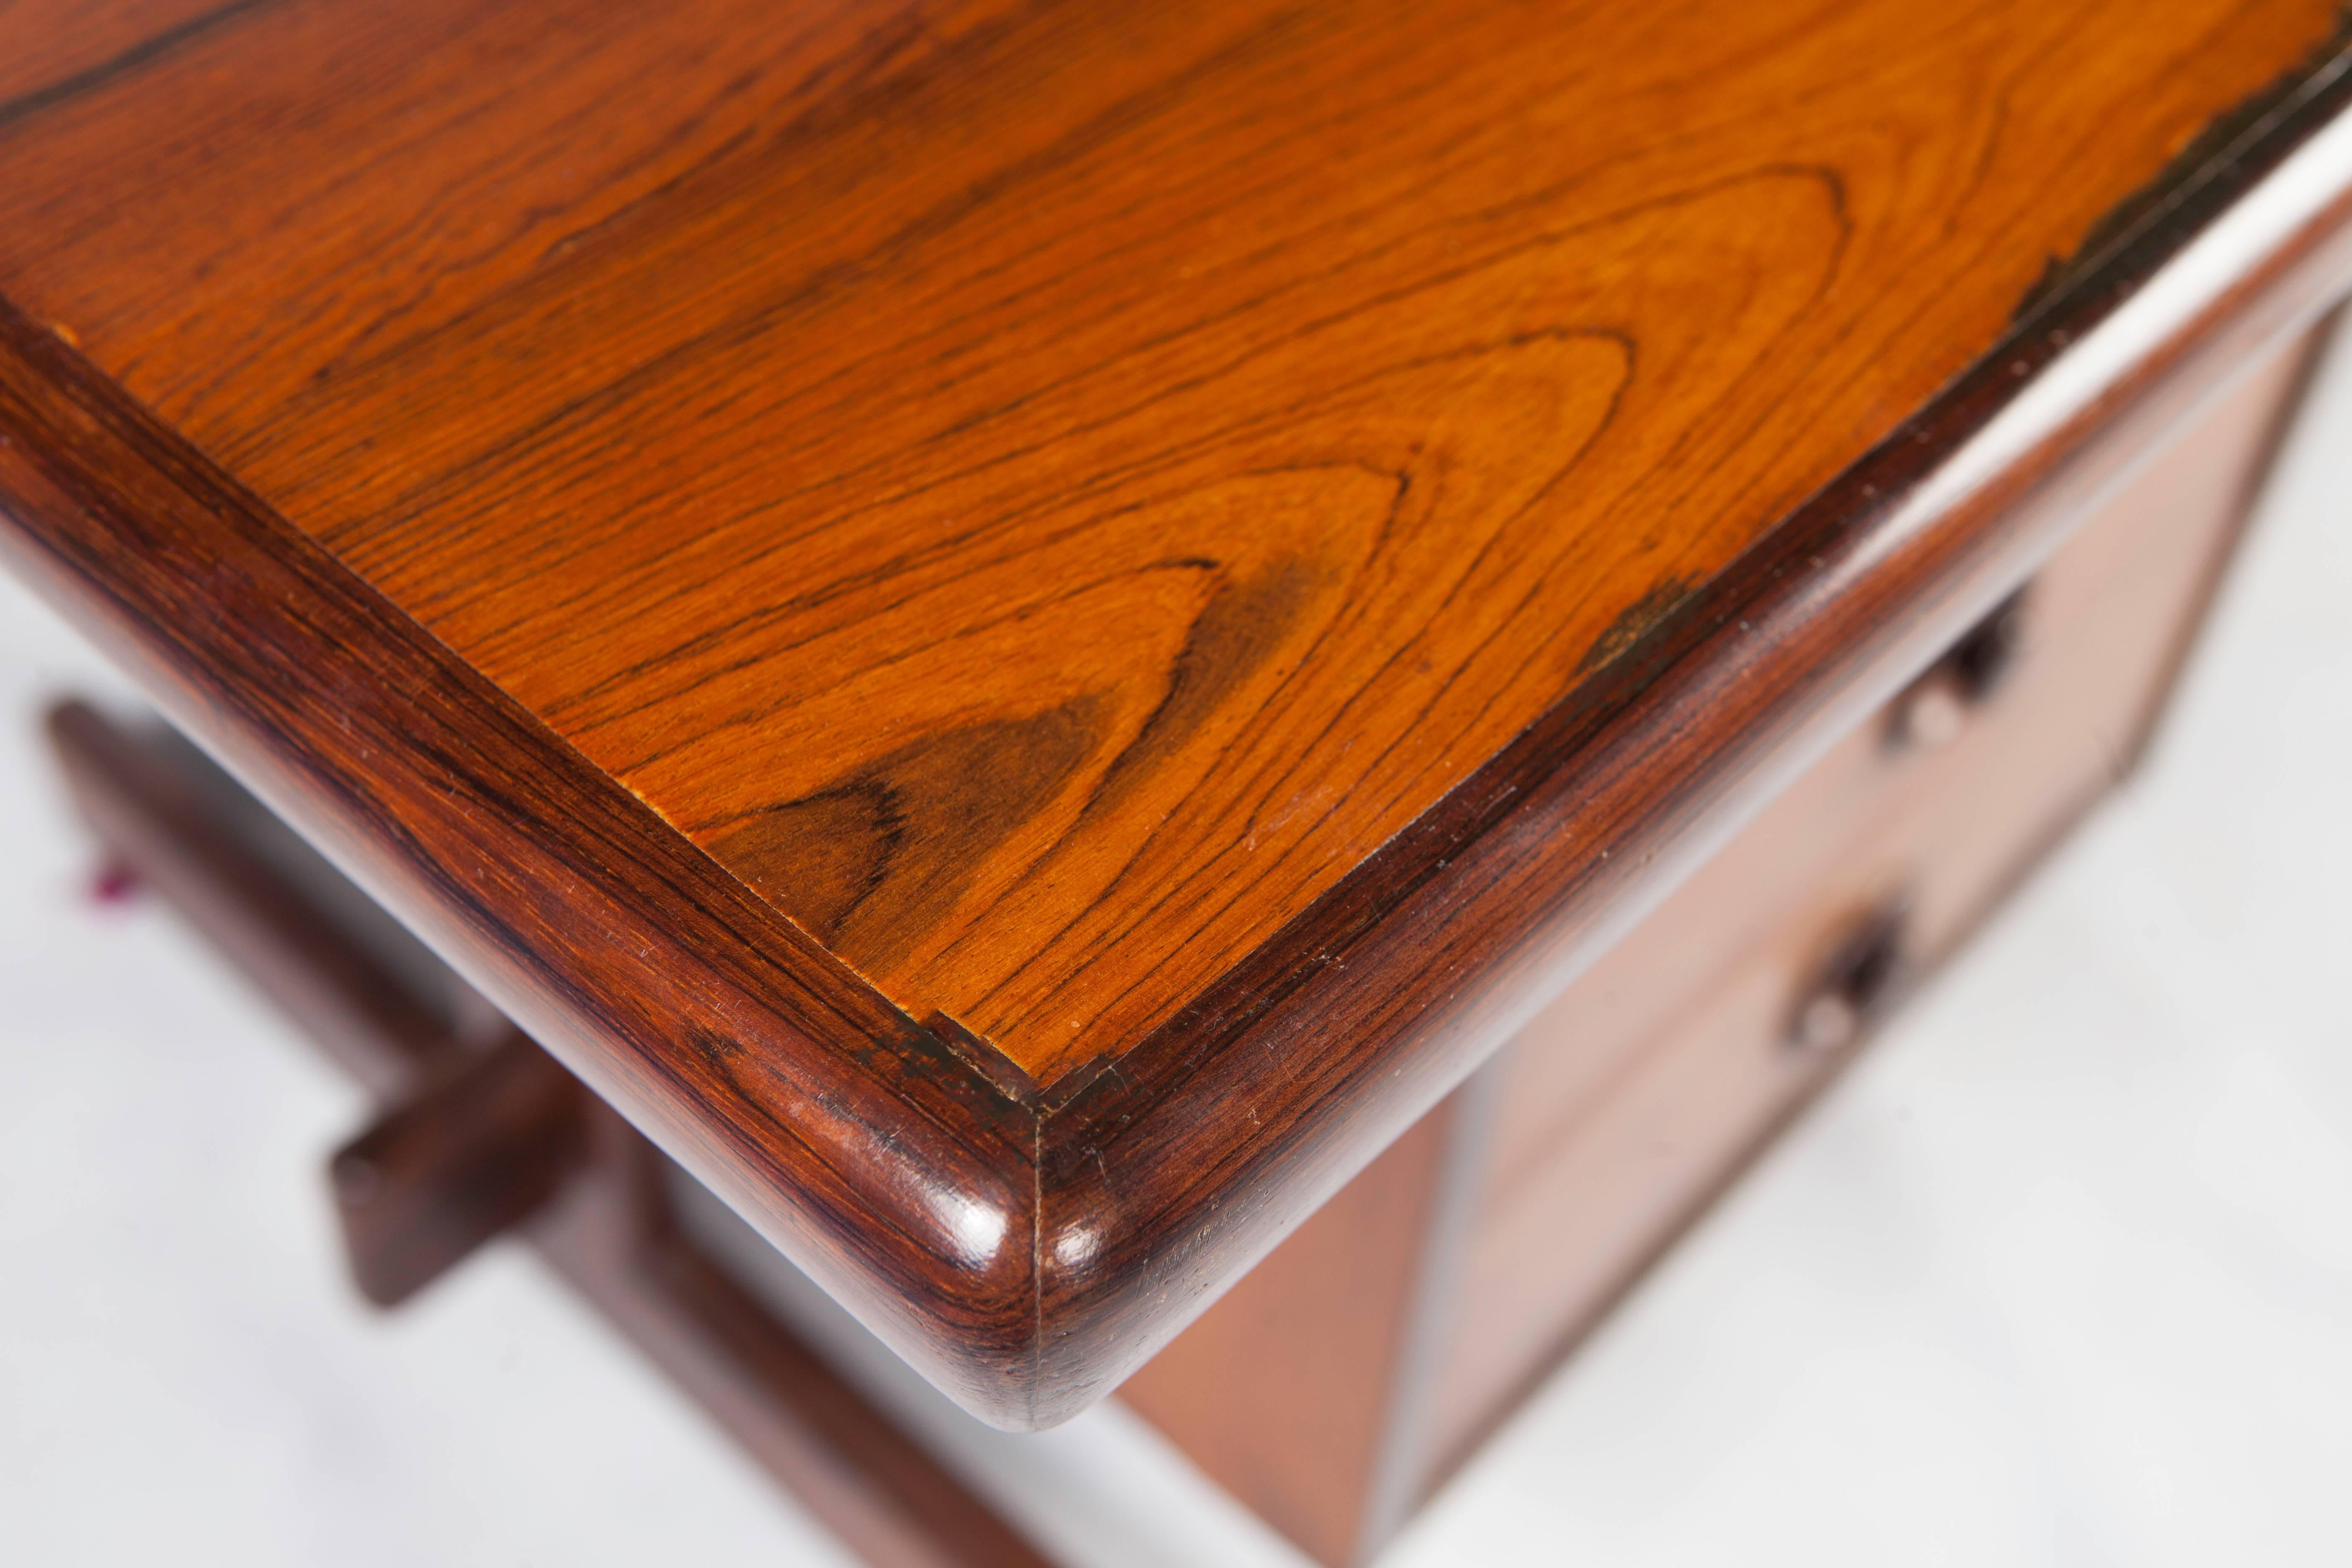 Mid-Century Modern rosewood (jacaranda) desk designed by Sergio Rodrigues.